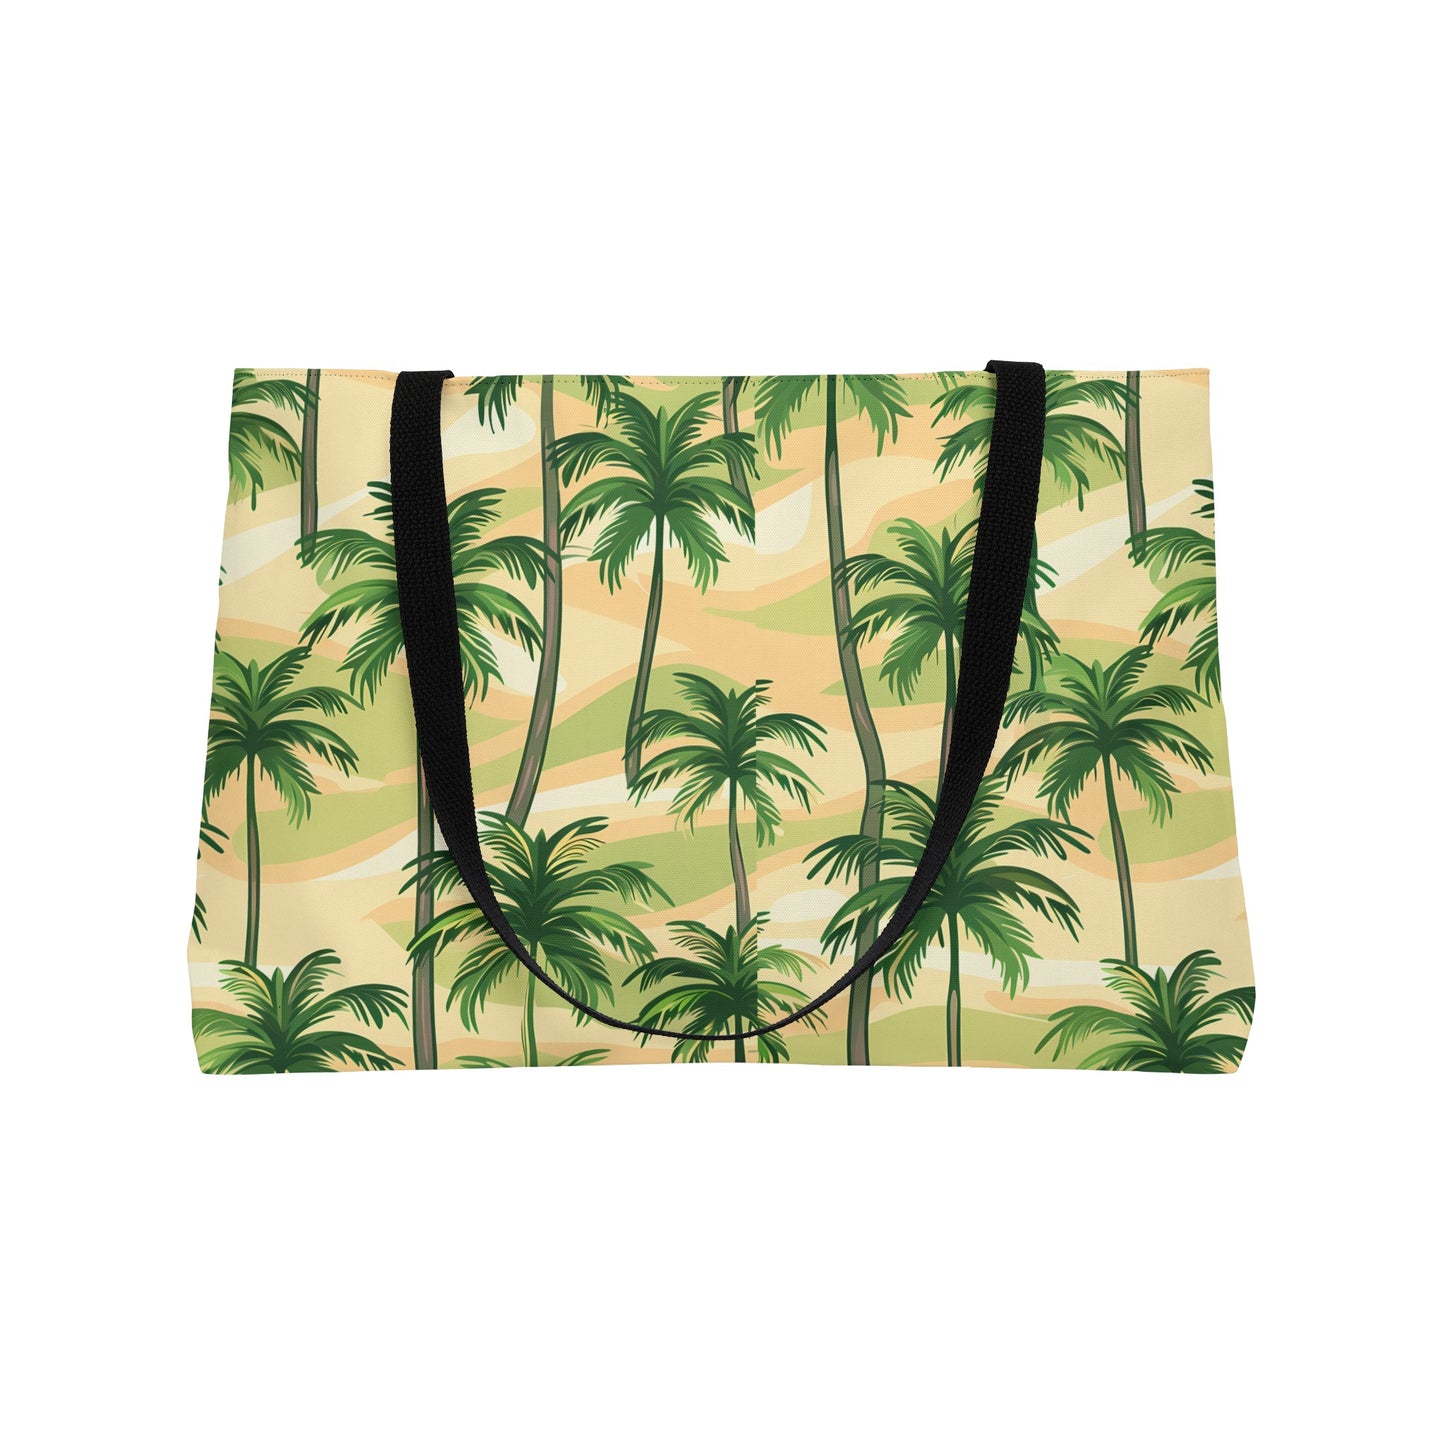 Tropical Tote Bag Palm Trees Design (24" x 13" x 2")